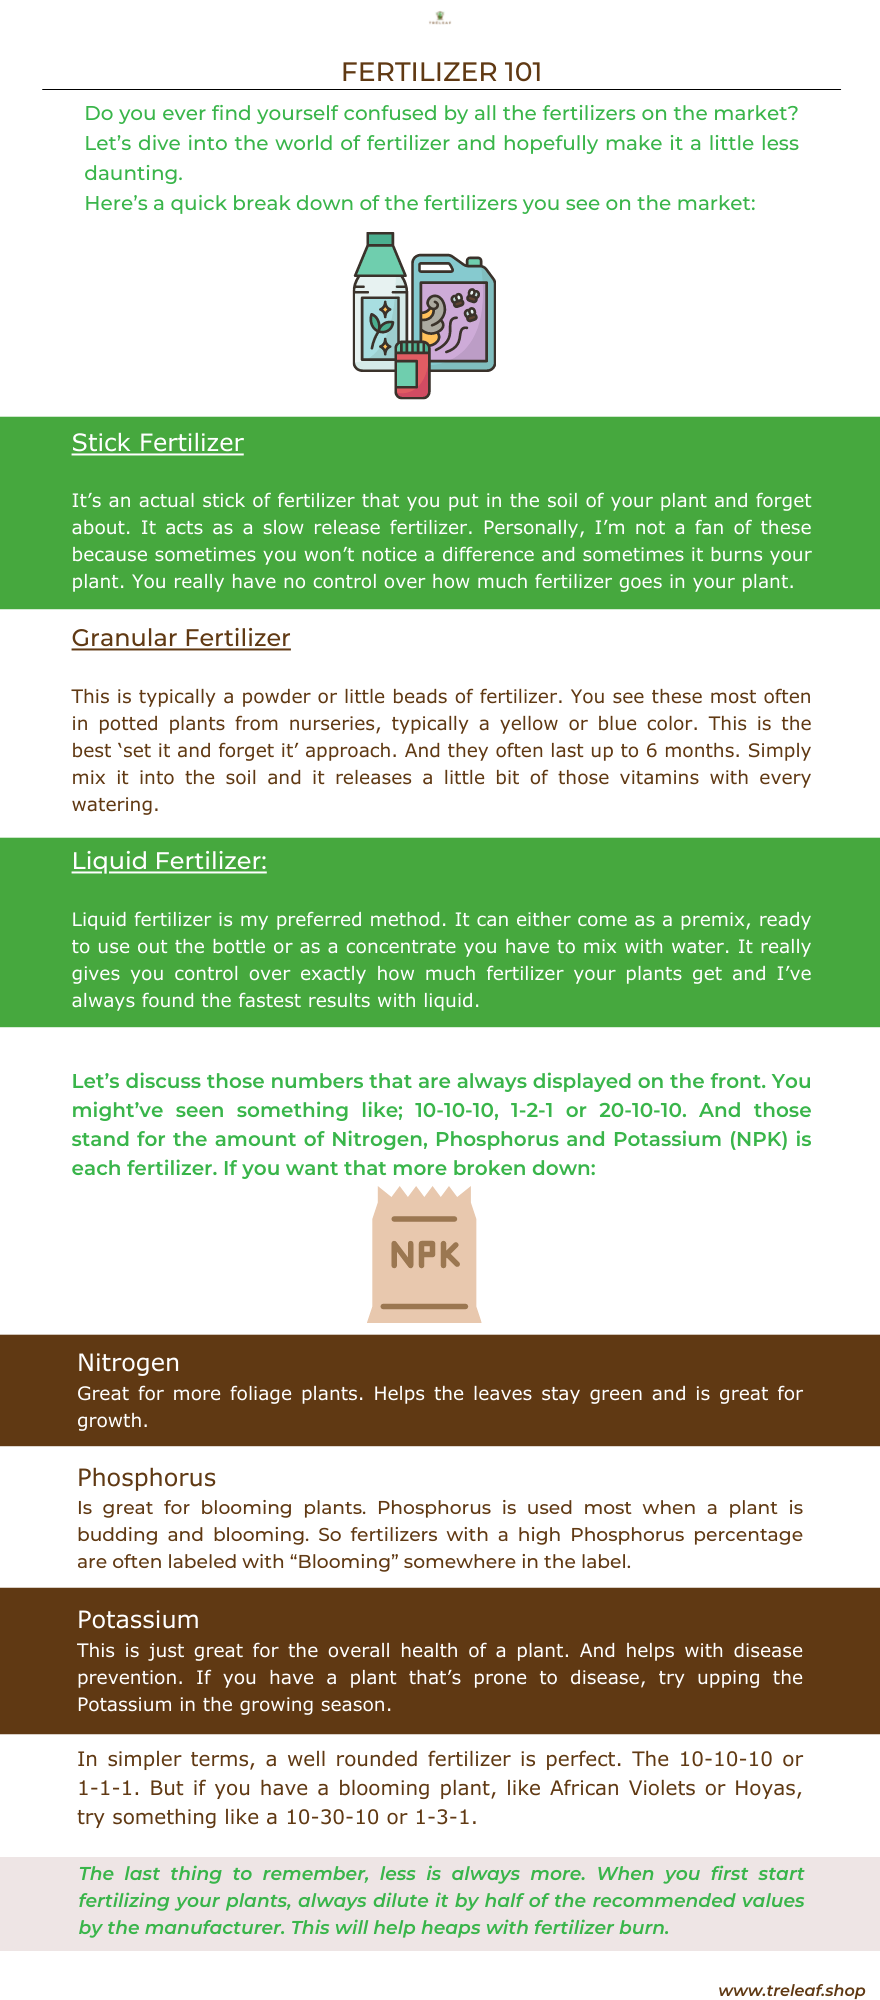 infographic explaining what NPK values on fertilizer stands for